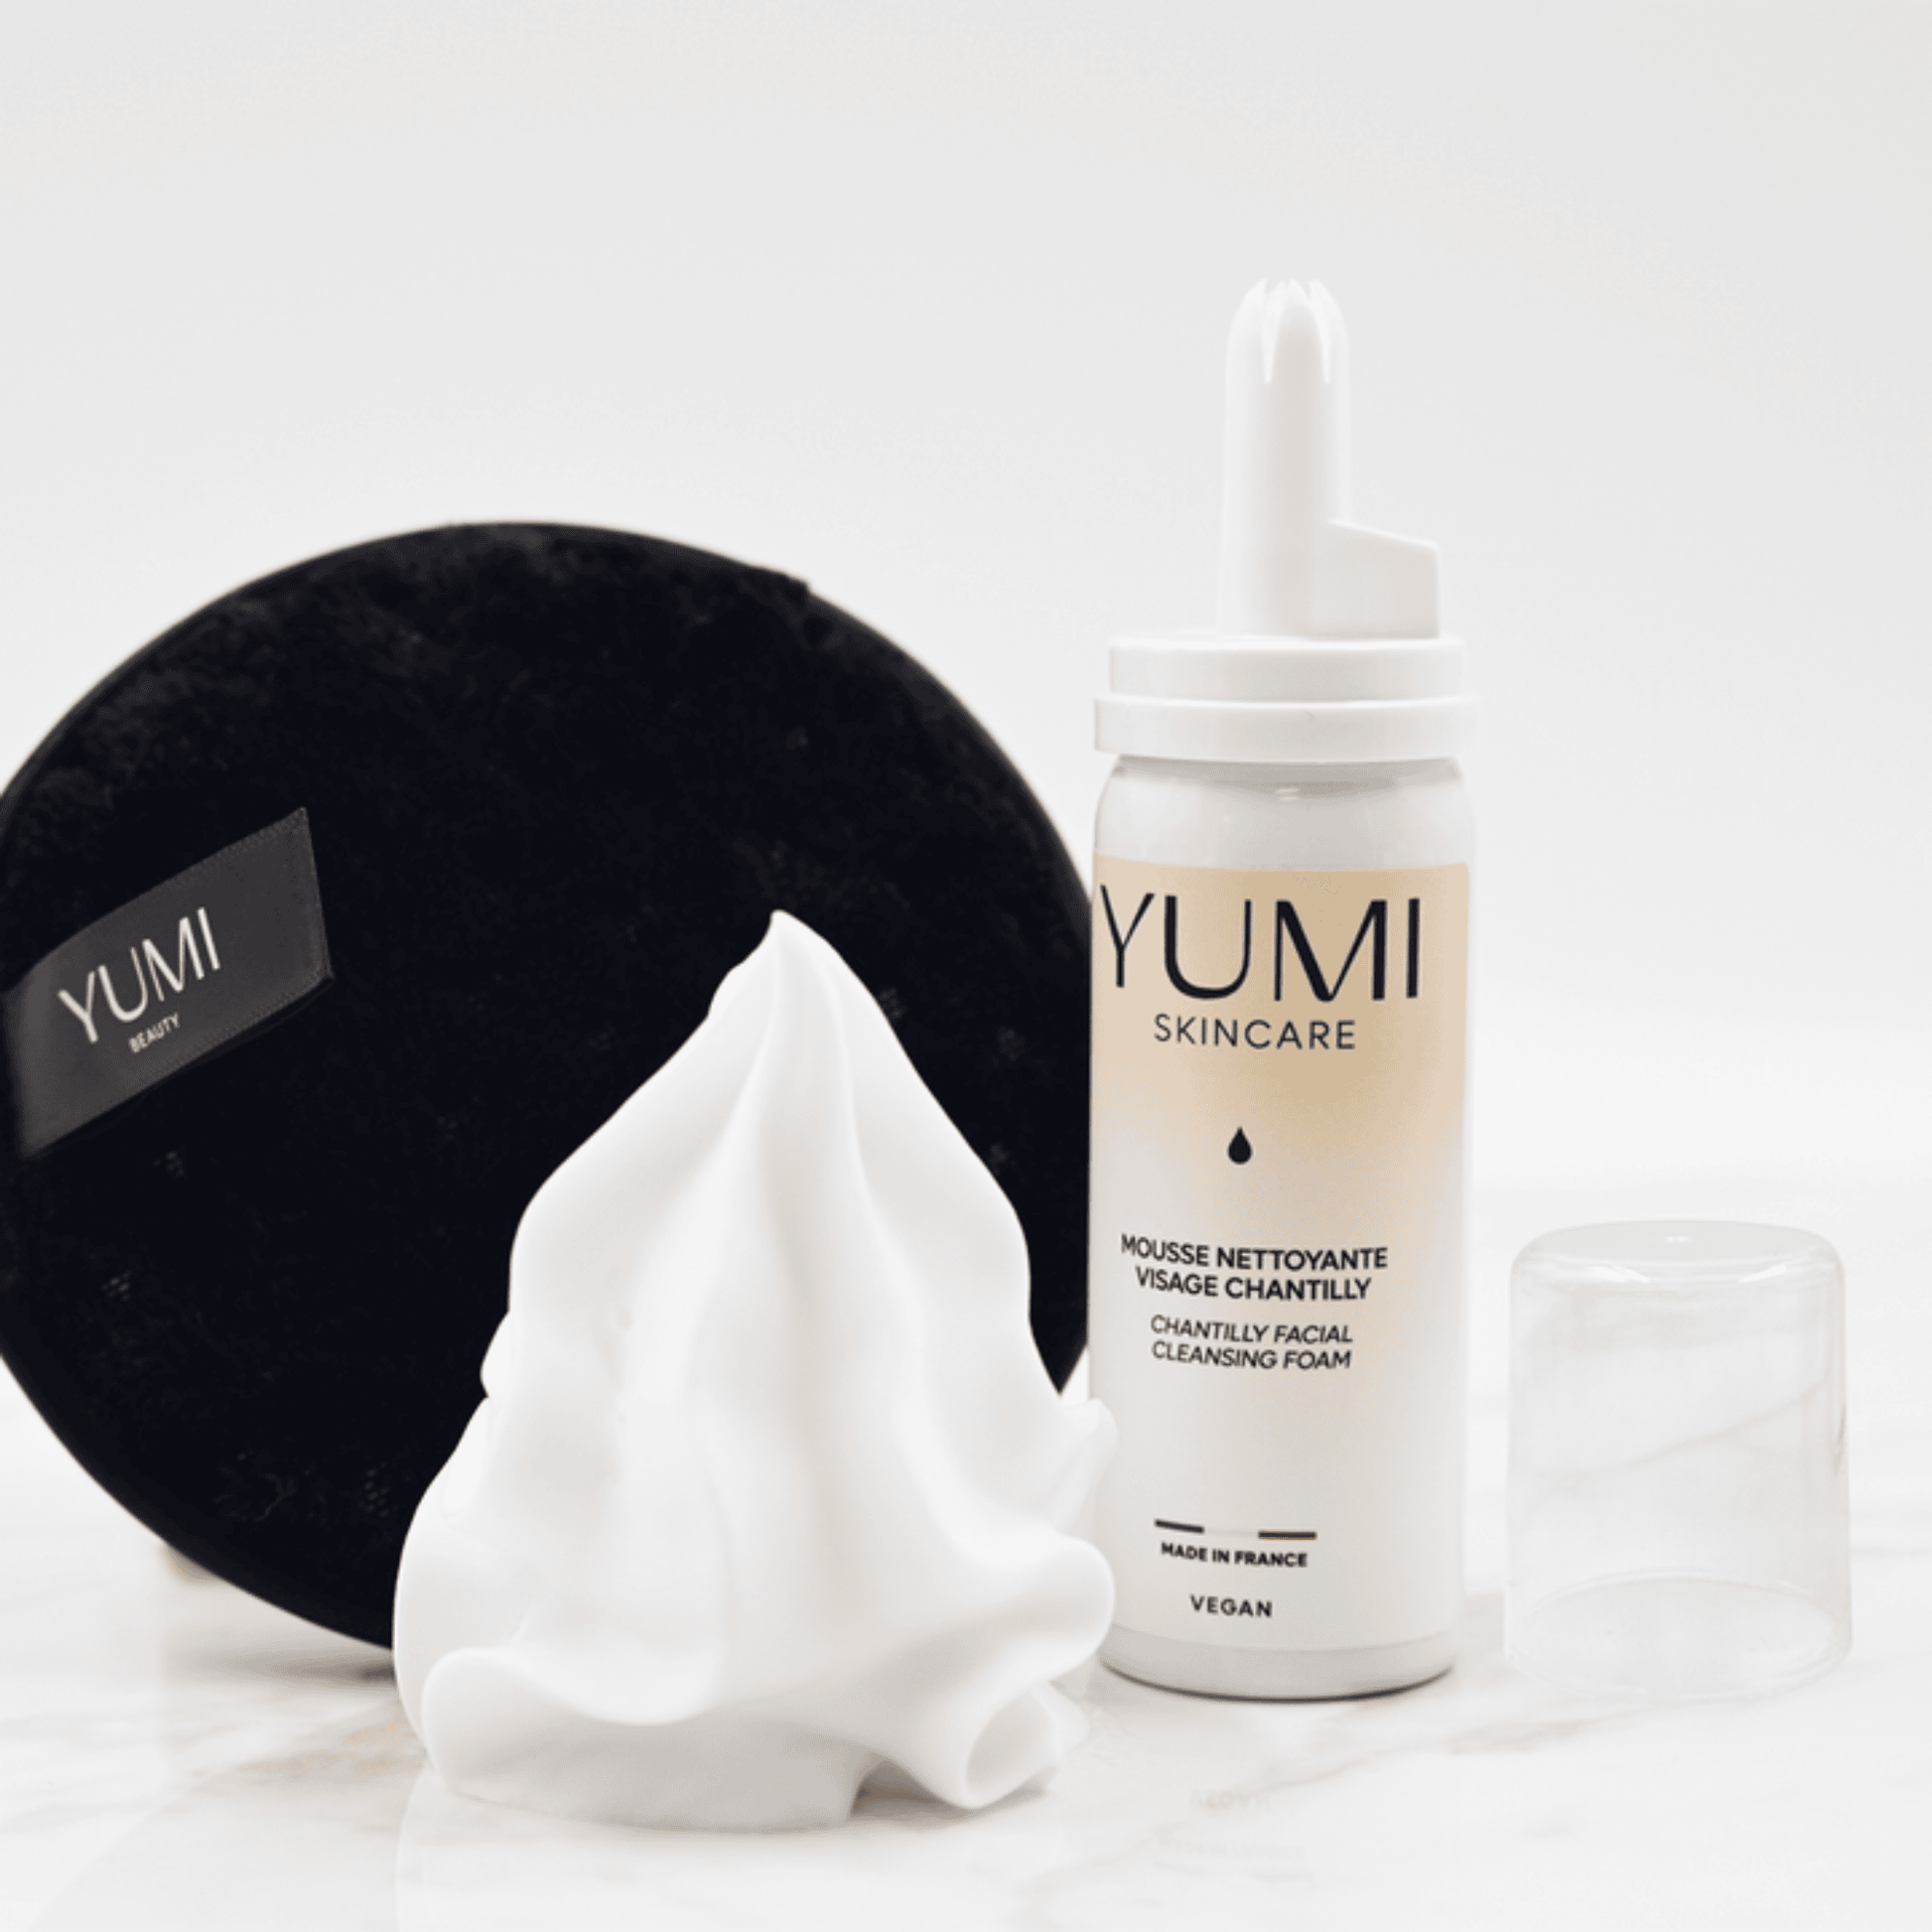 Yumi Skincare Chantilly Facial Cleansing Foam